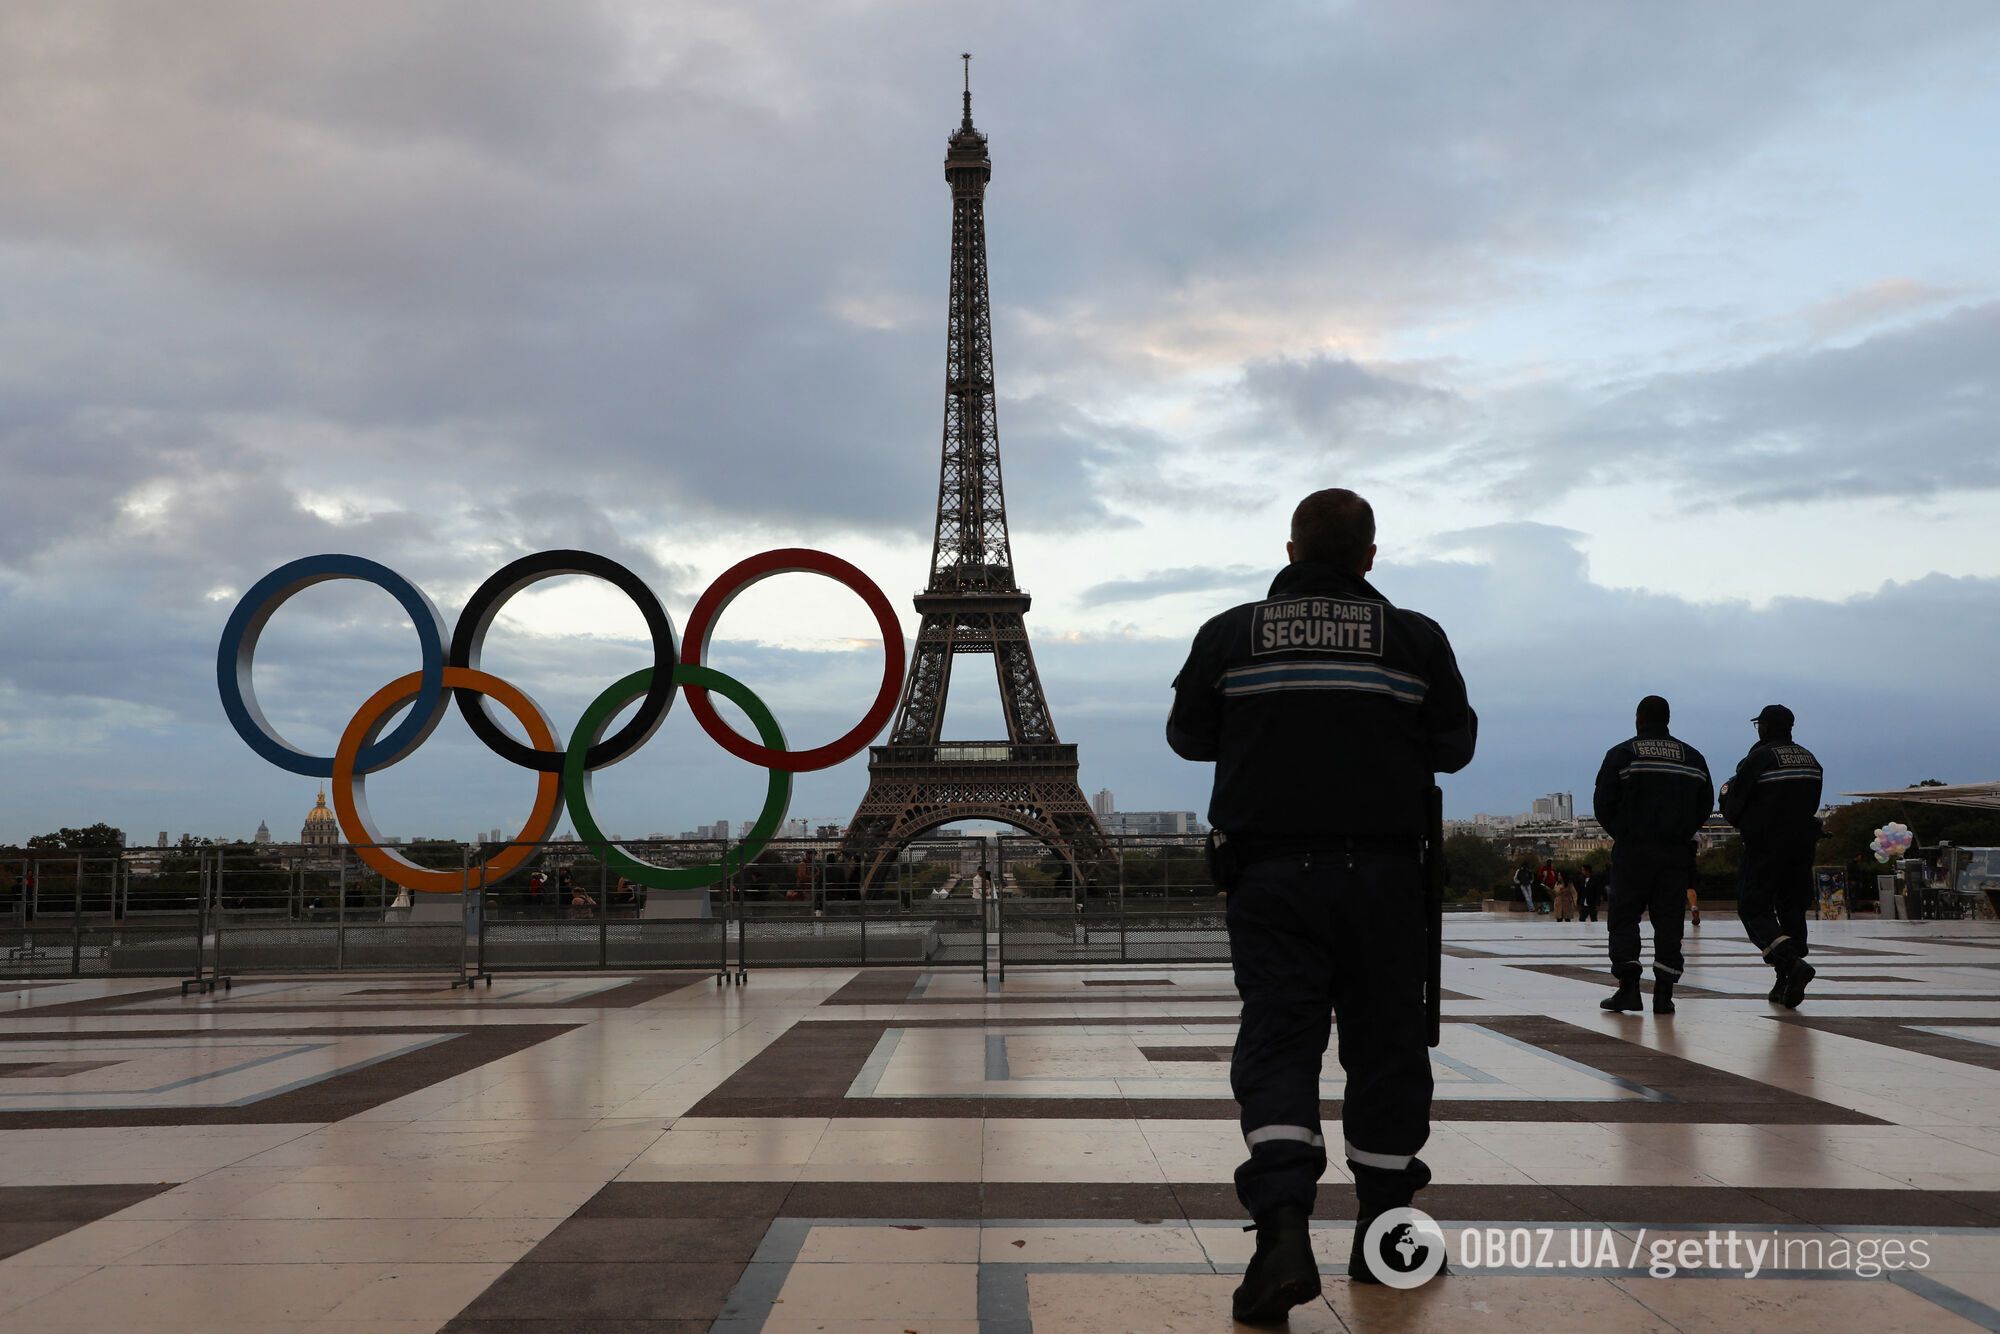  В Париже протестующие сожгли "олимпийские кольца". Видео